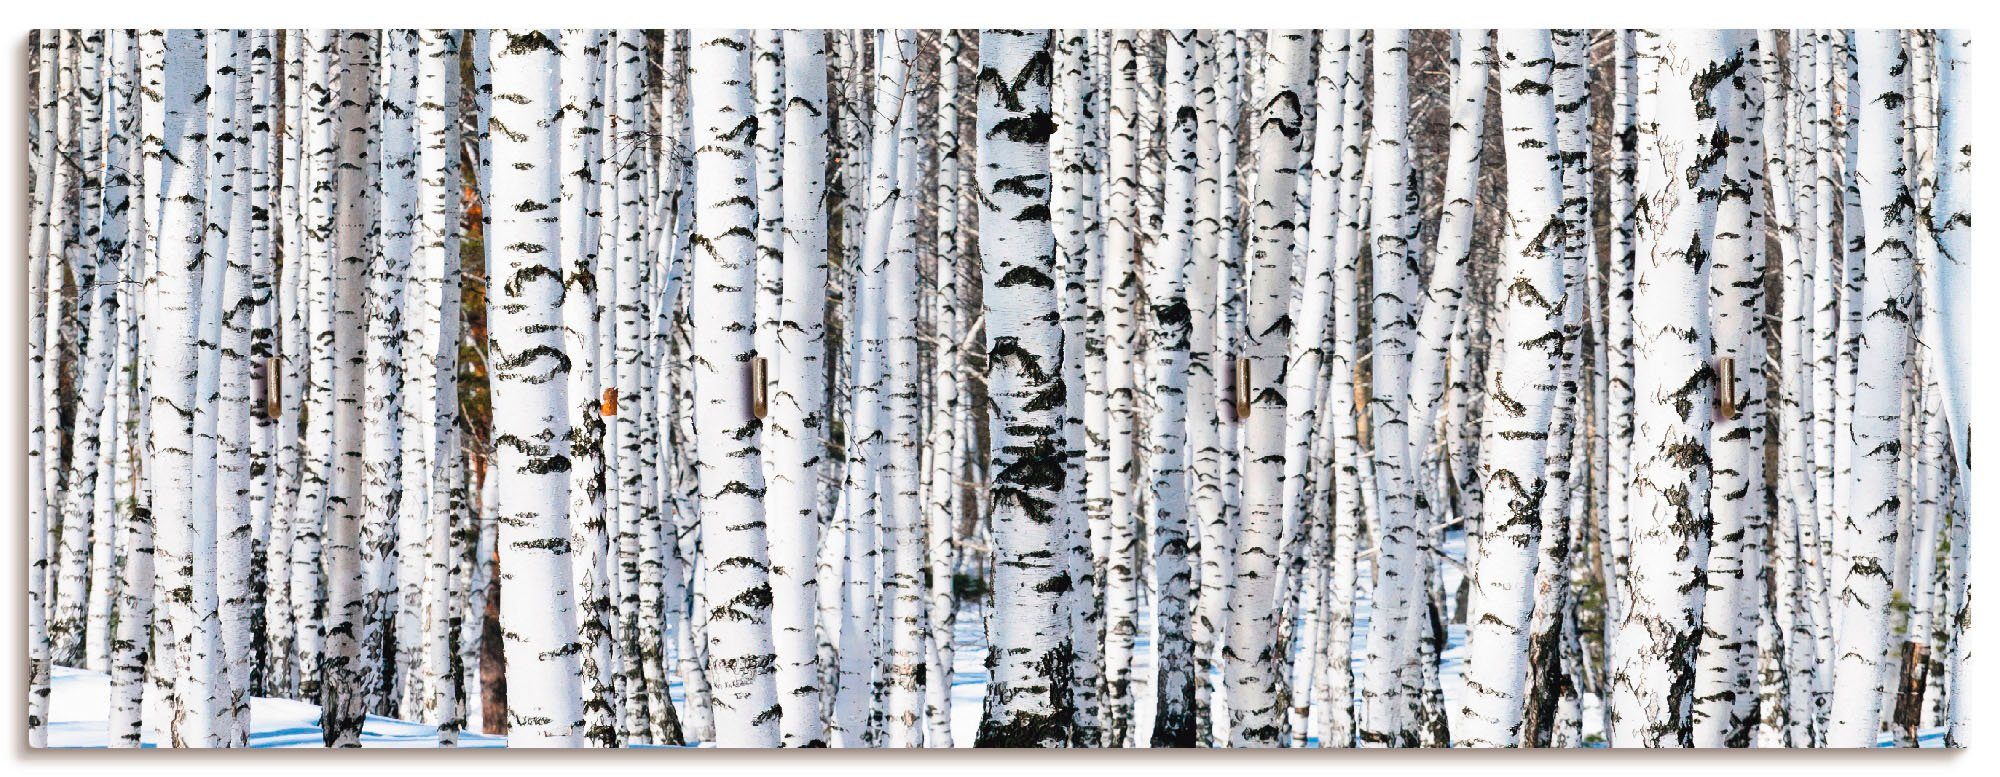 Artland Sleutelbord Winter berkenbos winter sereniteit van hout met 4 sleutelhaakjes – sleutelbord, sleutelborden, sleutelhouder, sleutelhanger voor de hal – stijl: modern